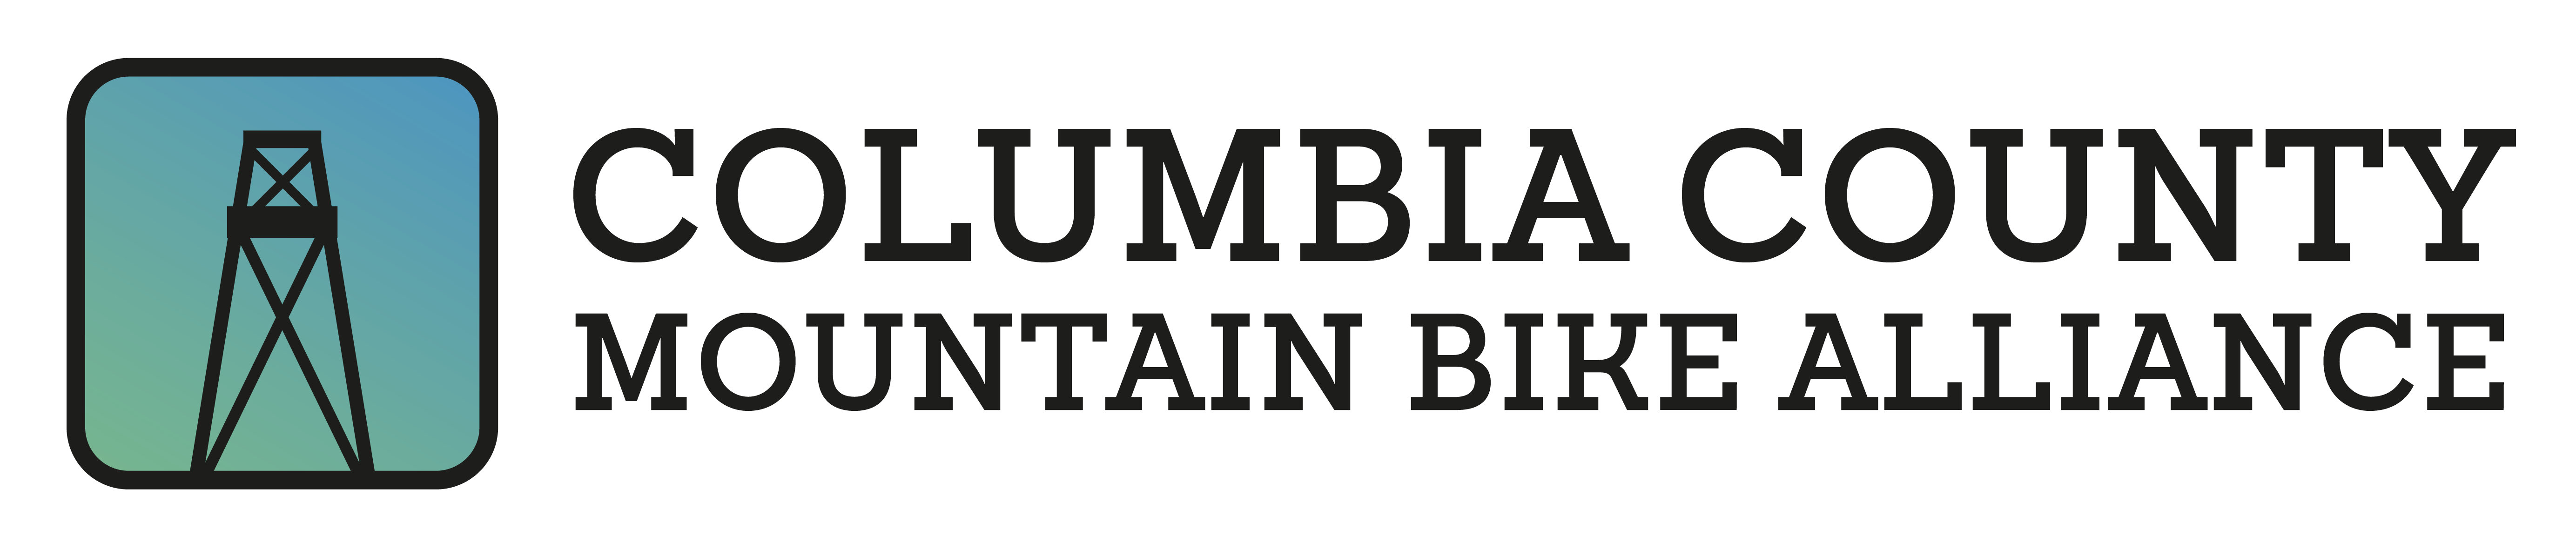 Columbia County Mountain Bike Alliance